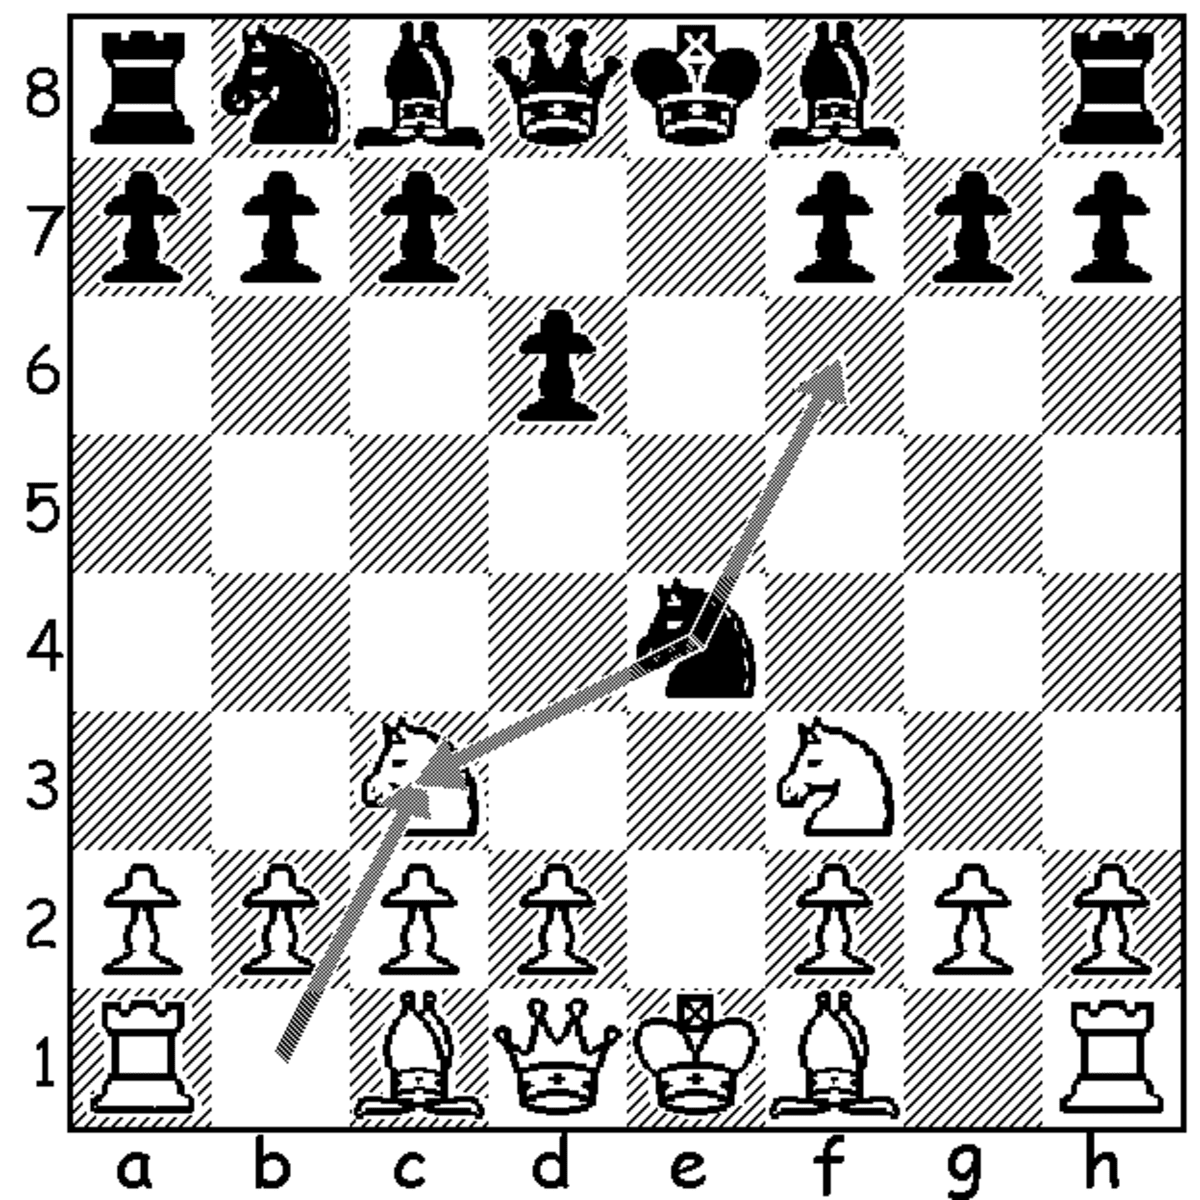 File:Classical Variation of the Caro-Kann Defense.jpg - Wikimedia Commons